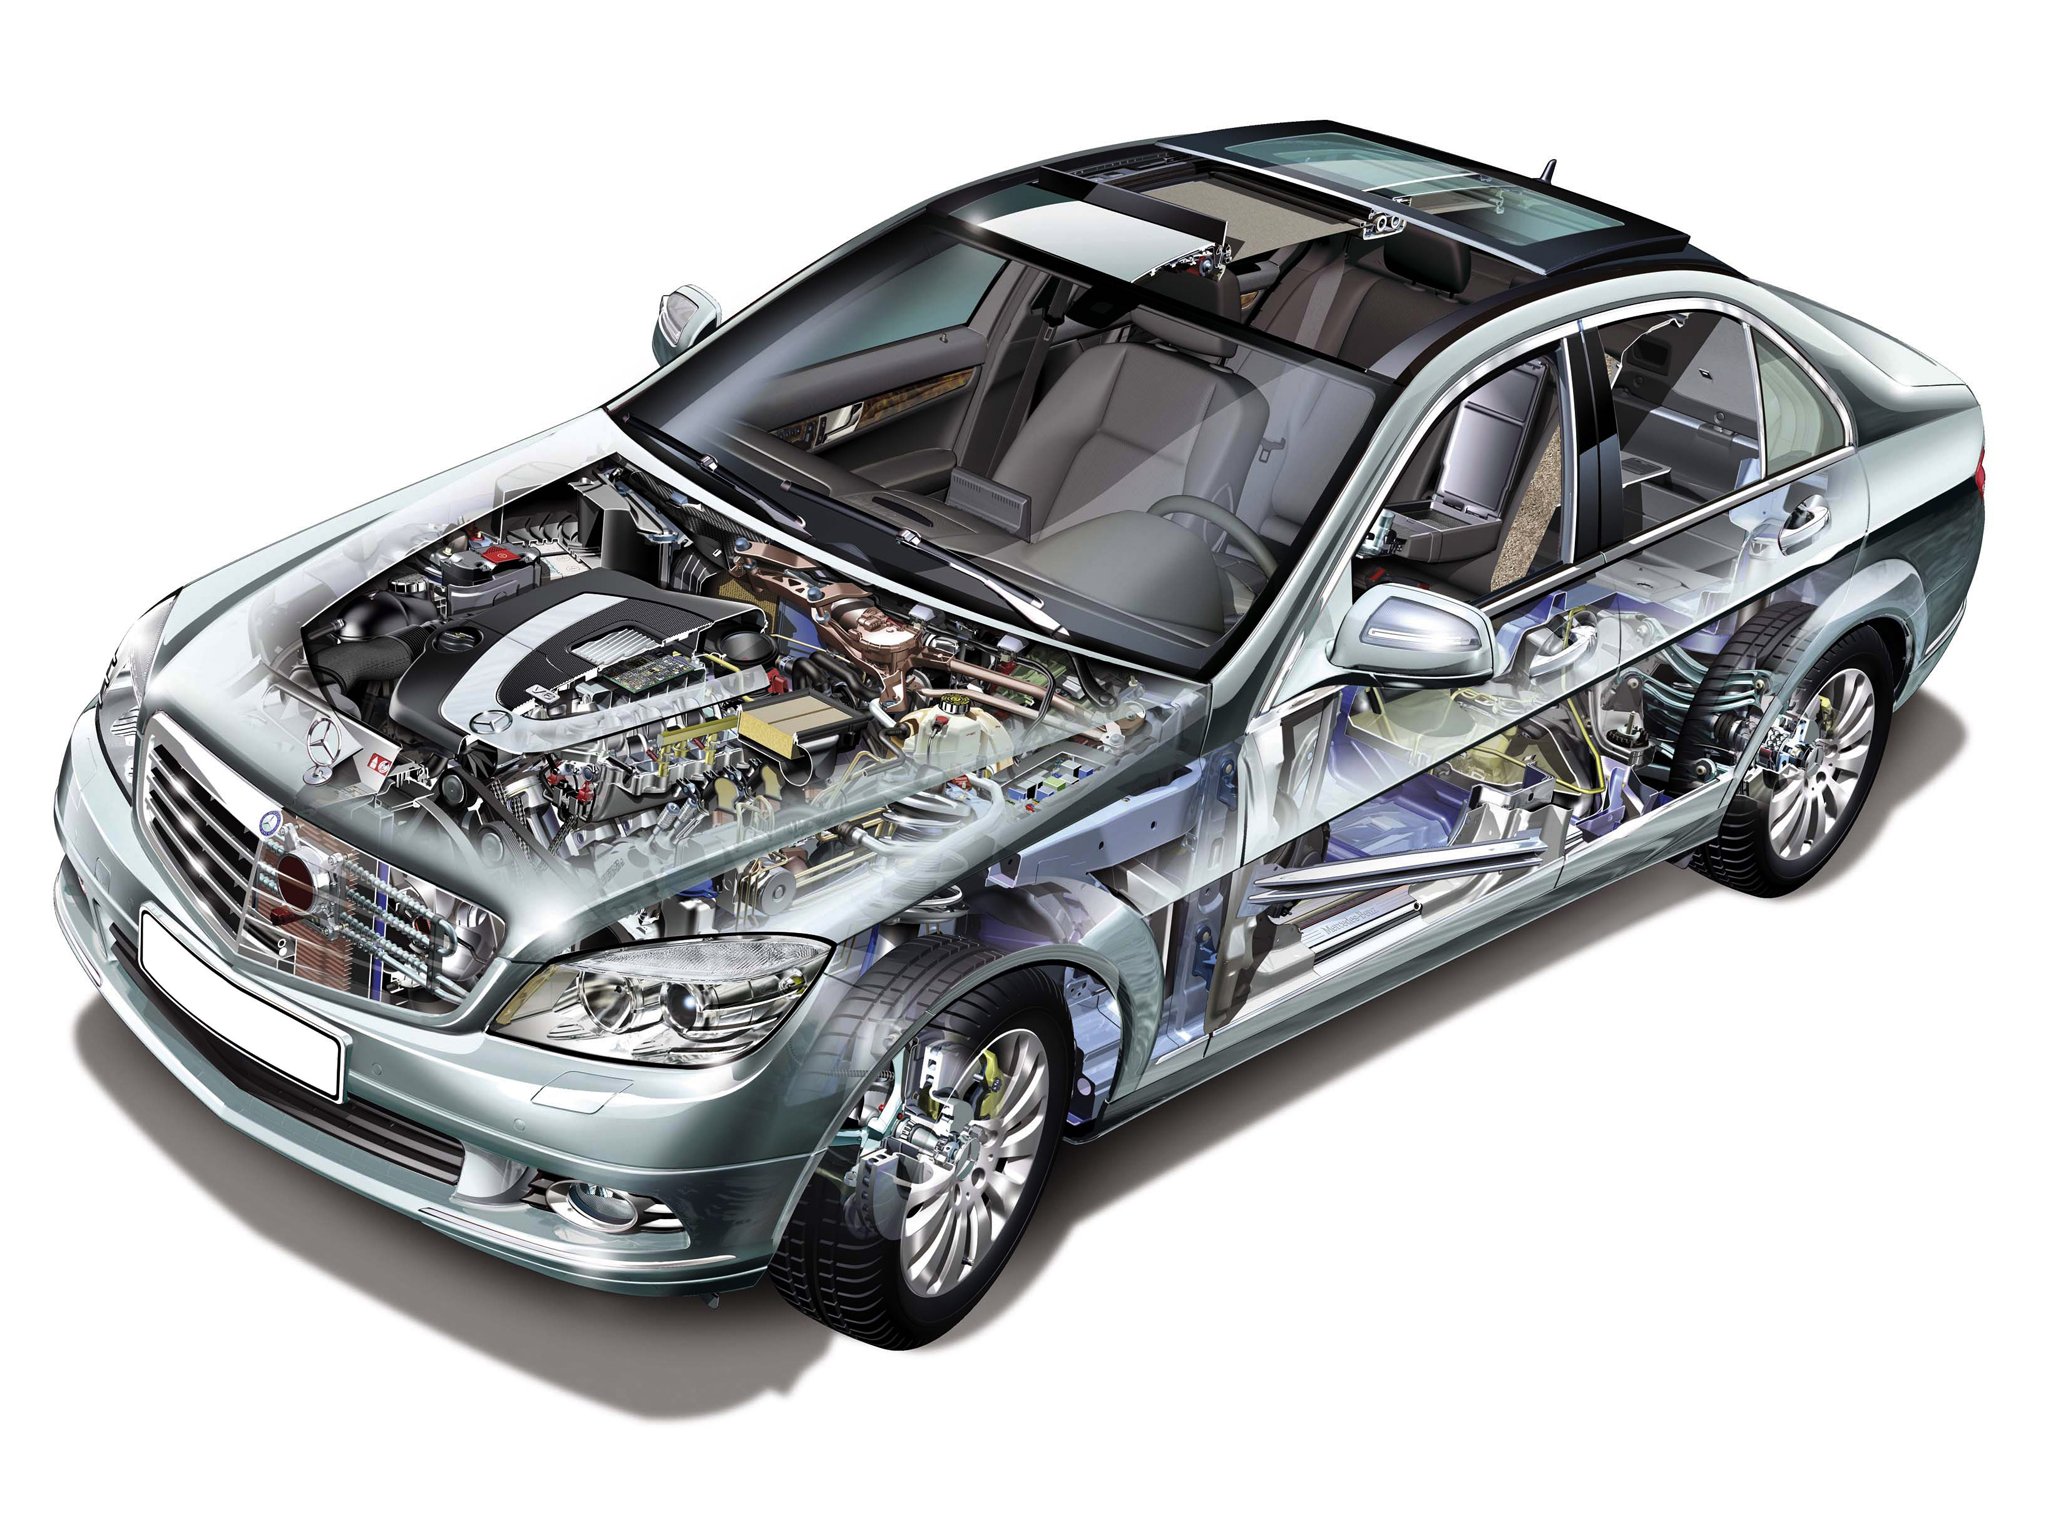 mercedes, Benz, C class, Sedan, Cars, Technical, Cutaway, 2007 Wallpaper